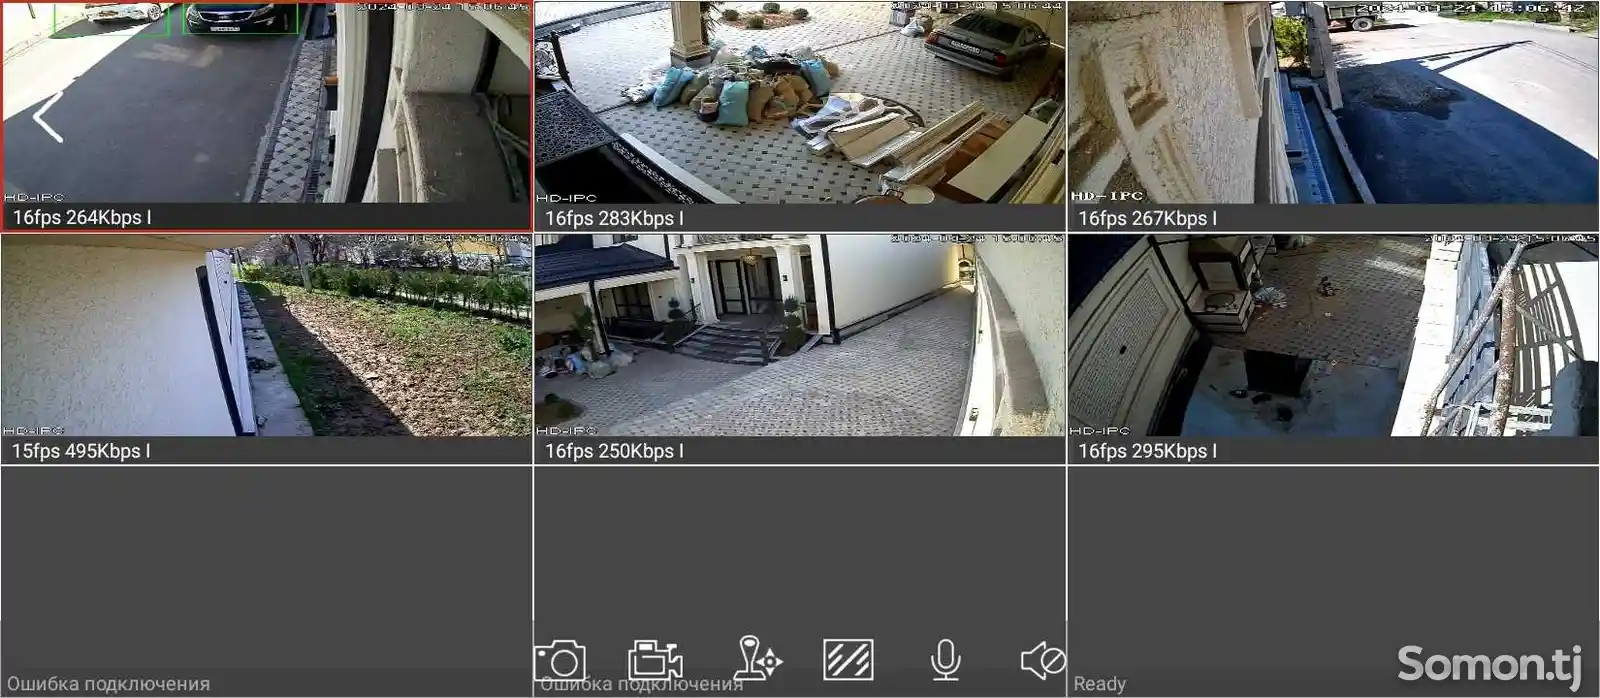 Услуги по установке камер видеонаблюдения с гарантией-15